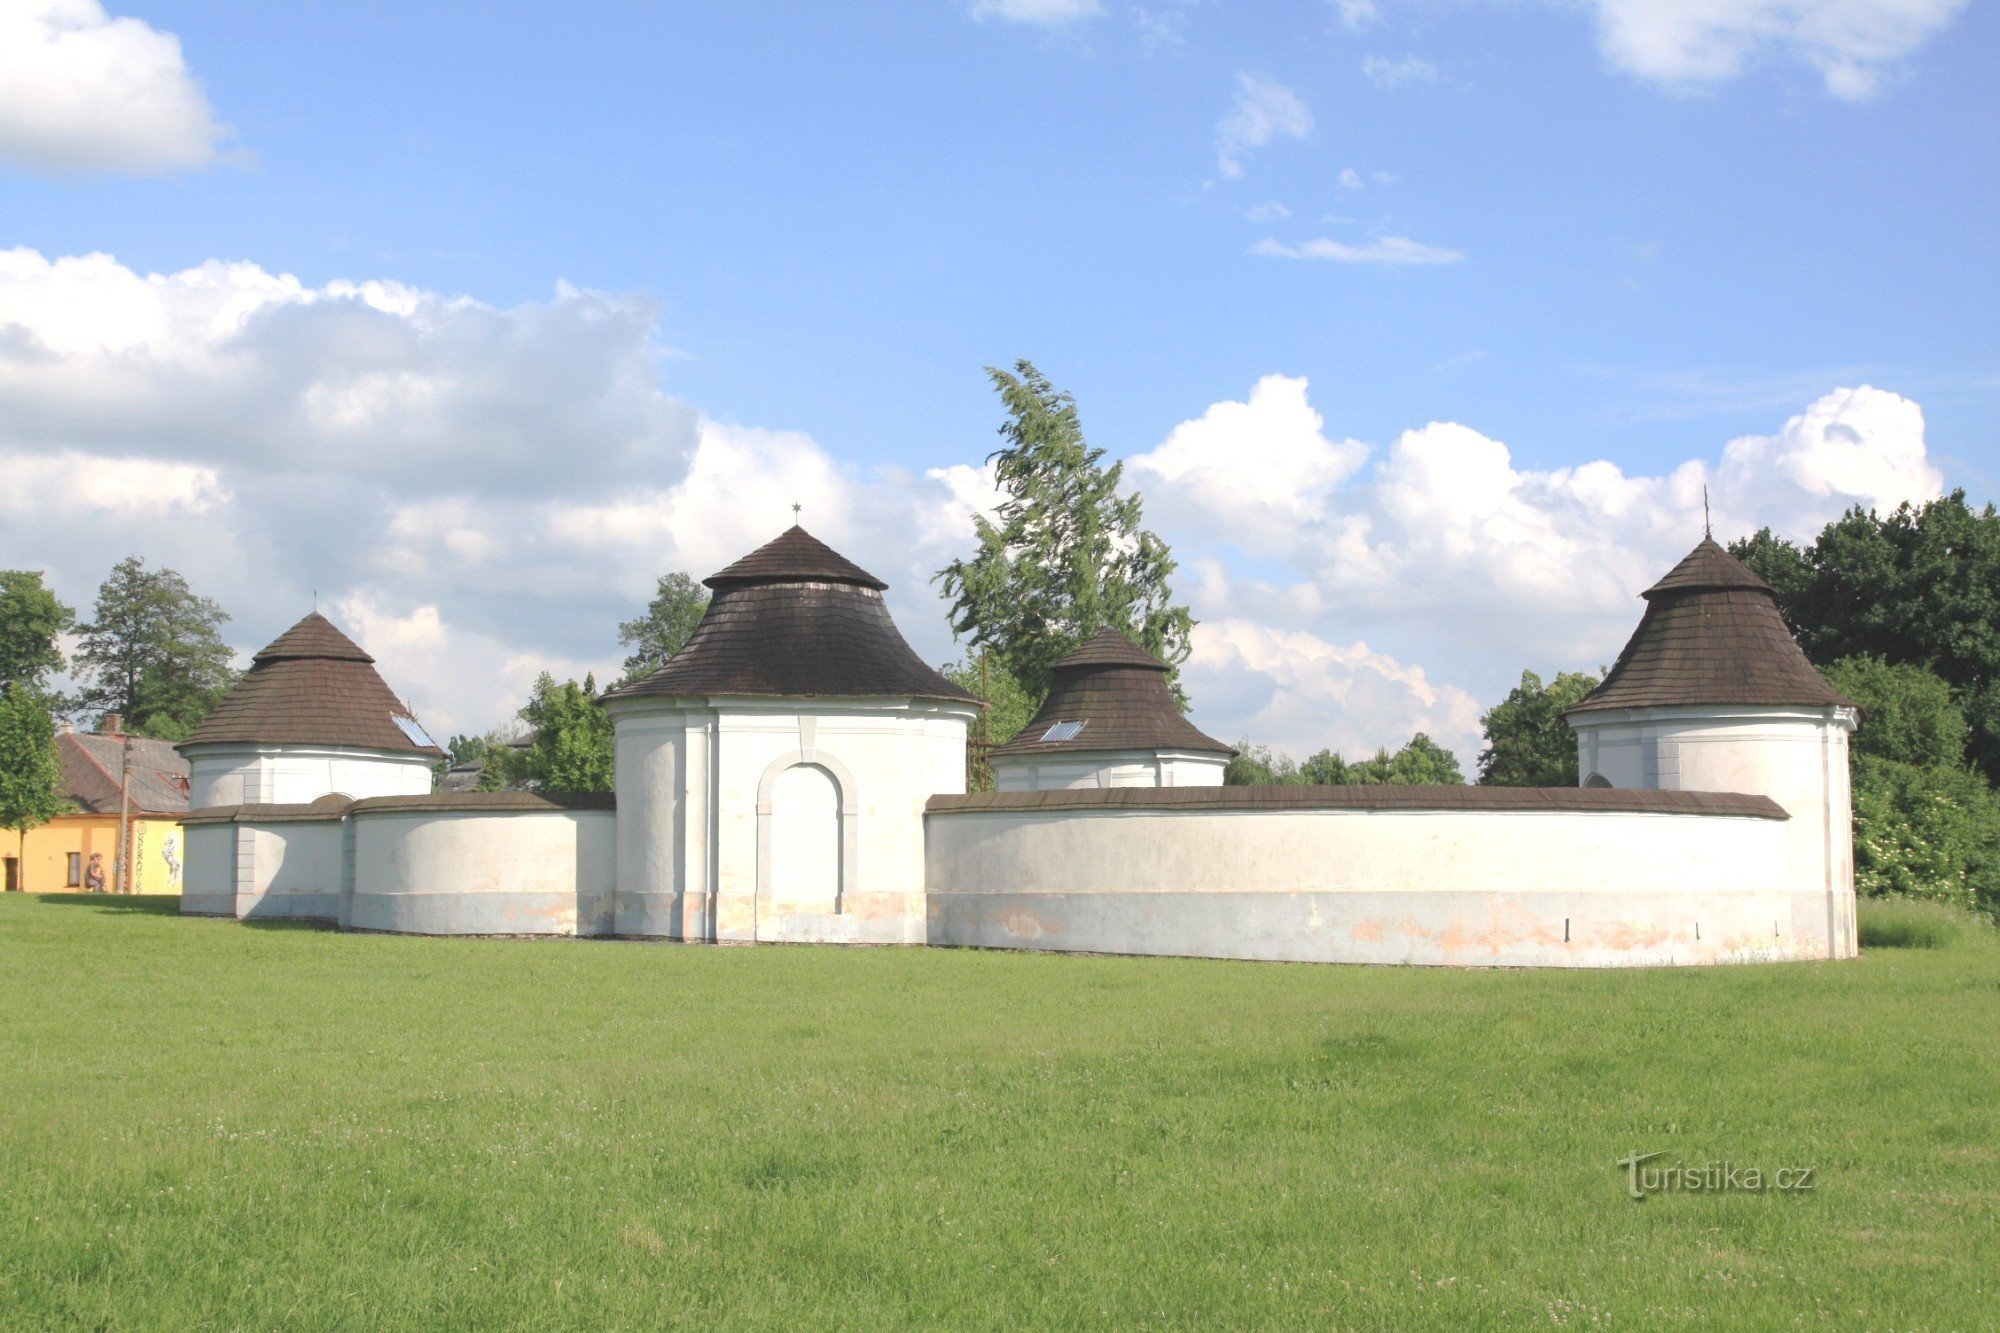 Žďár nad Sázavou - antiguo cementerio de la peste